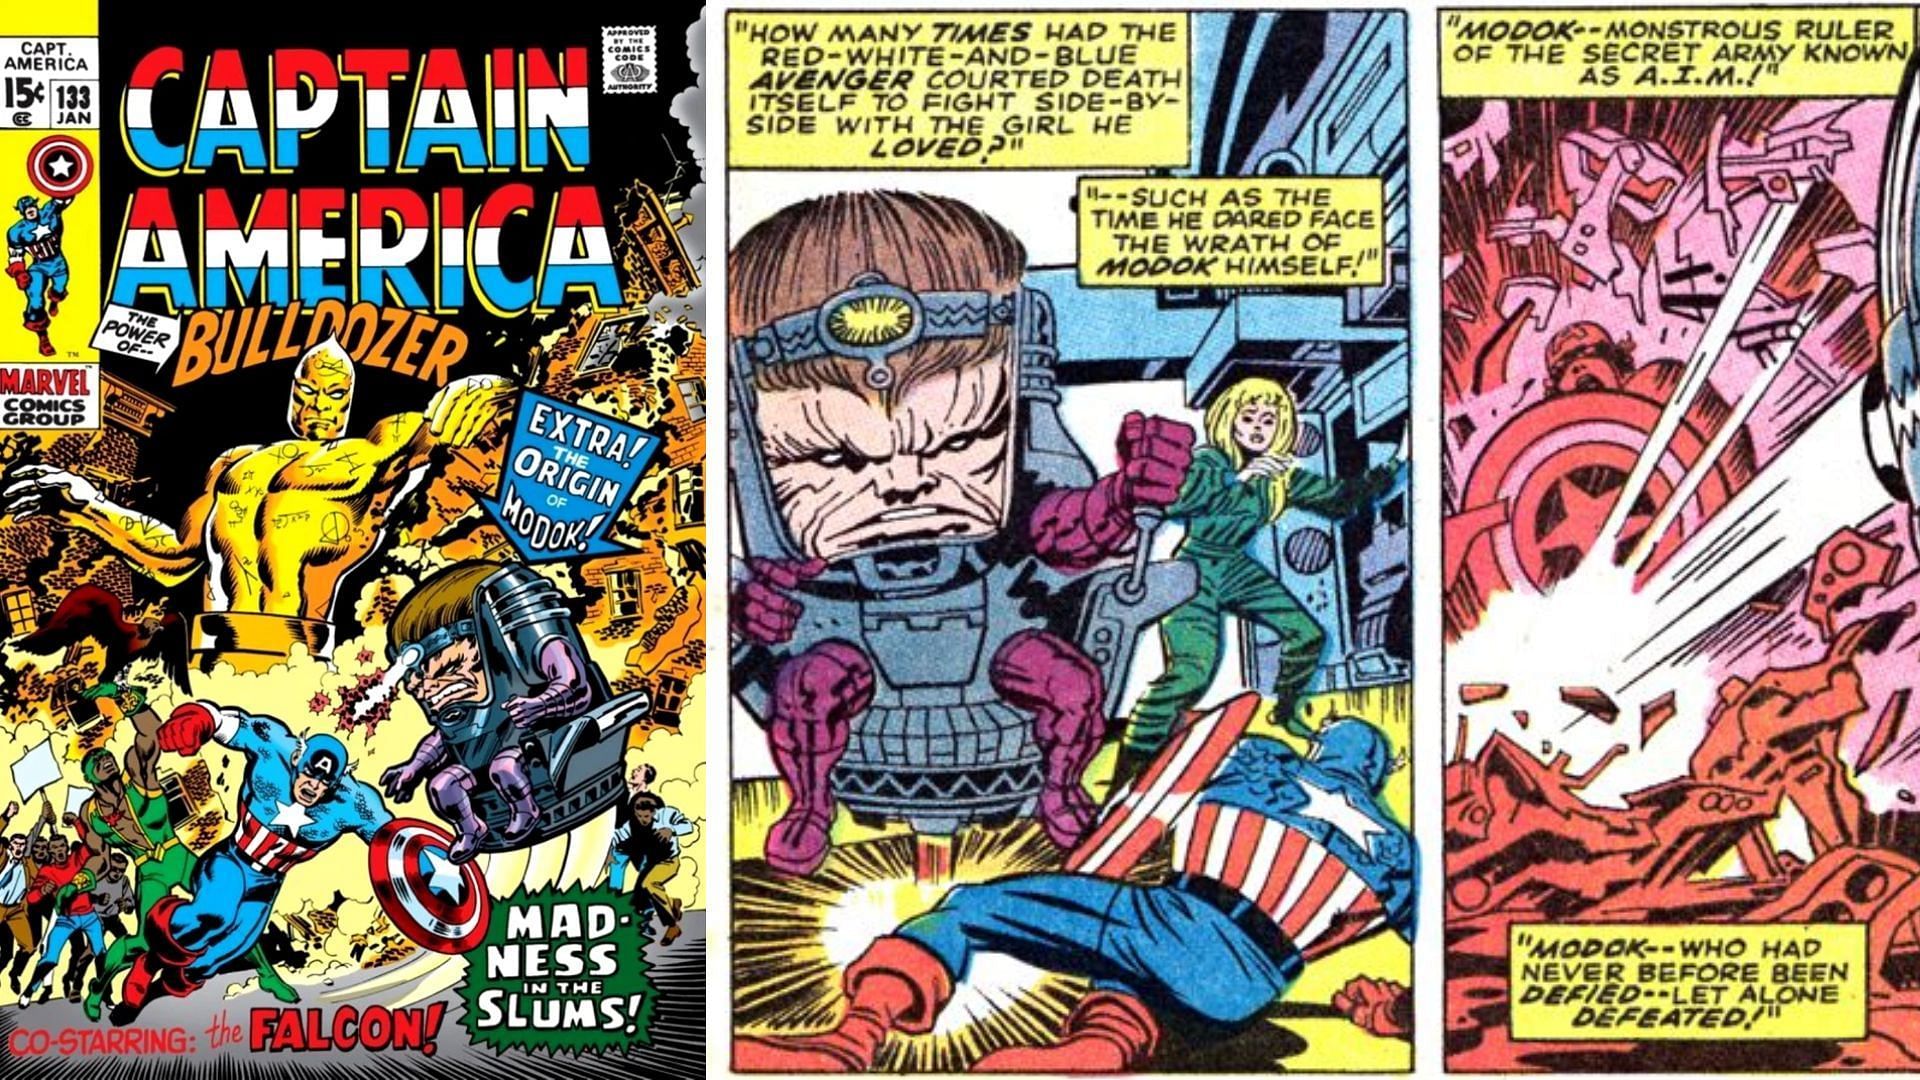 Captain America #133 revealed MODOK (Image via Marvel)